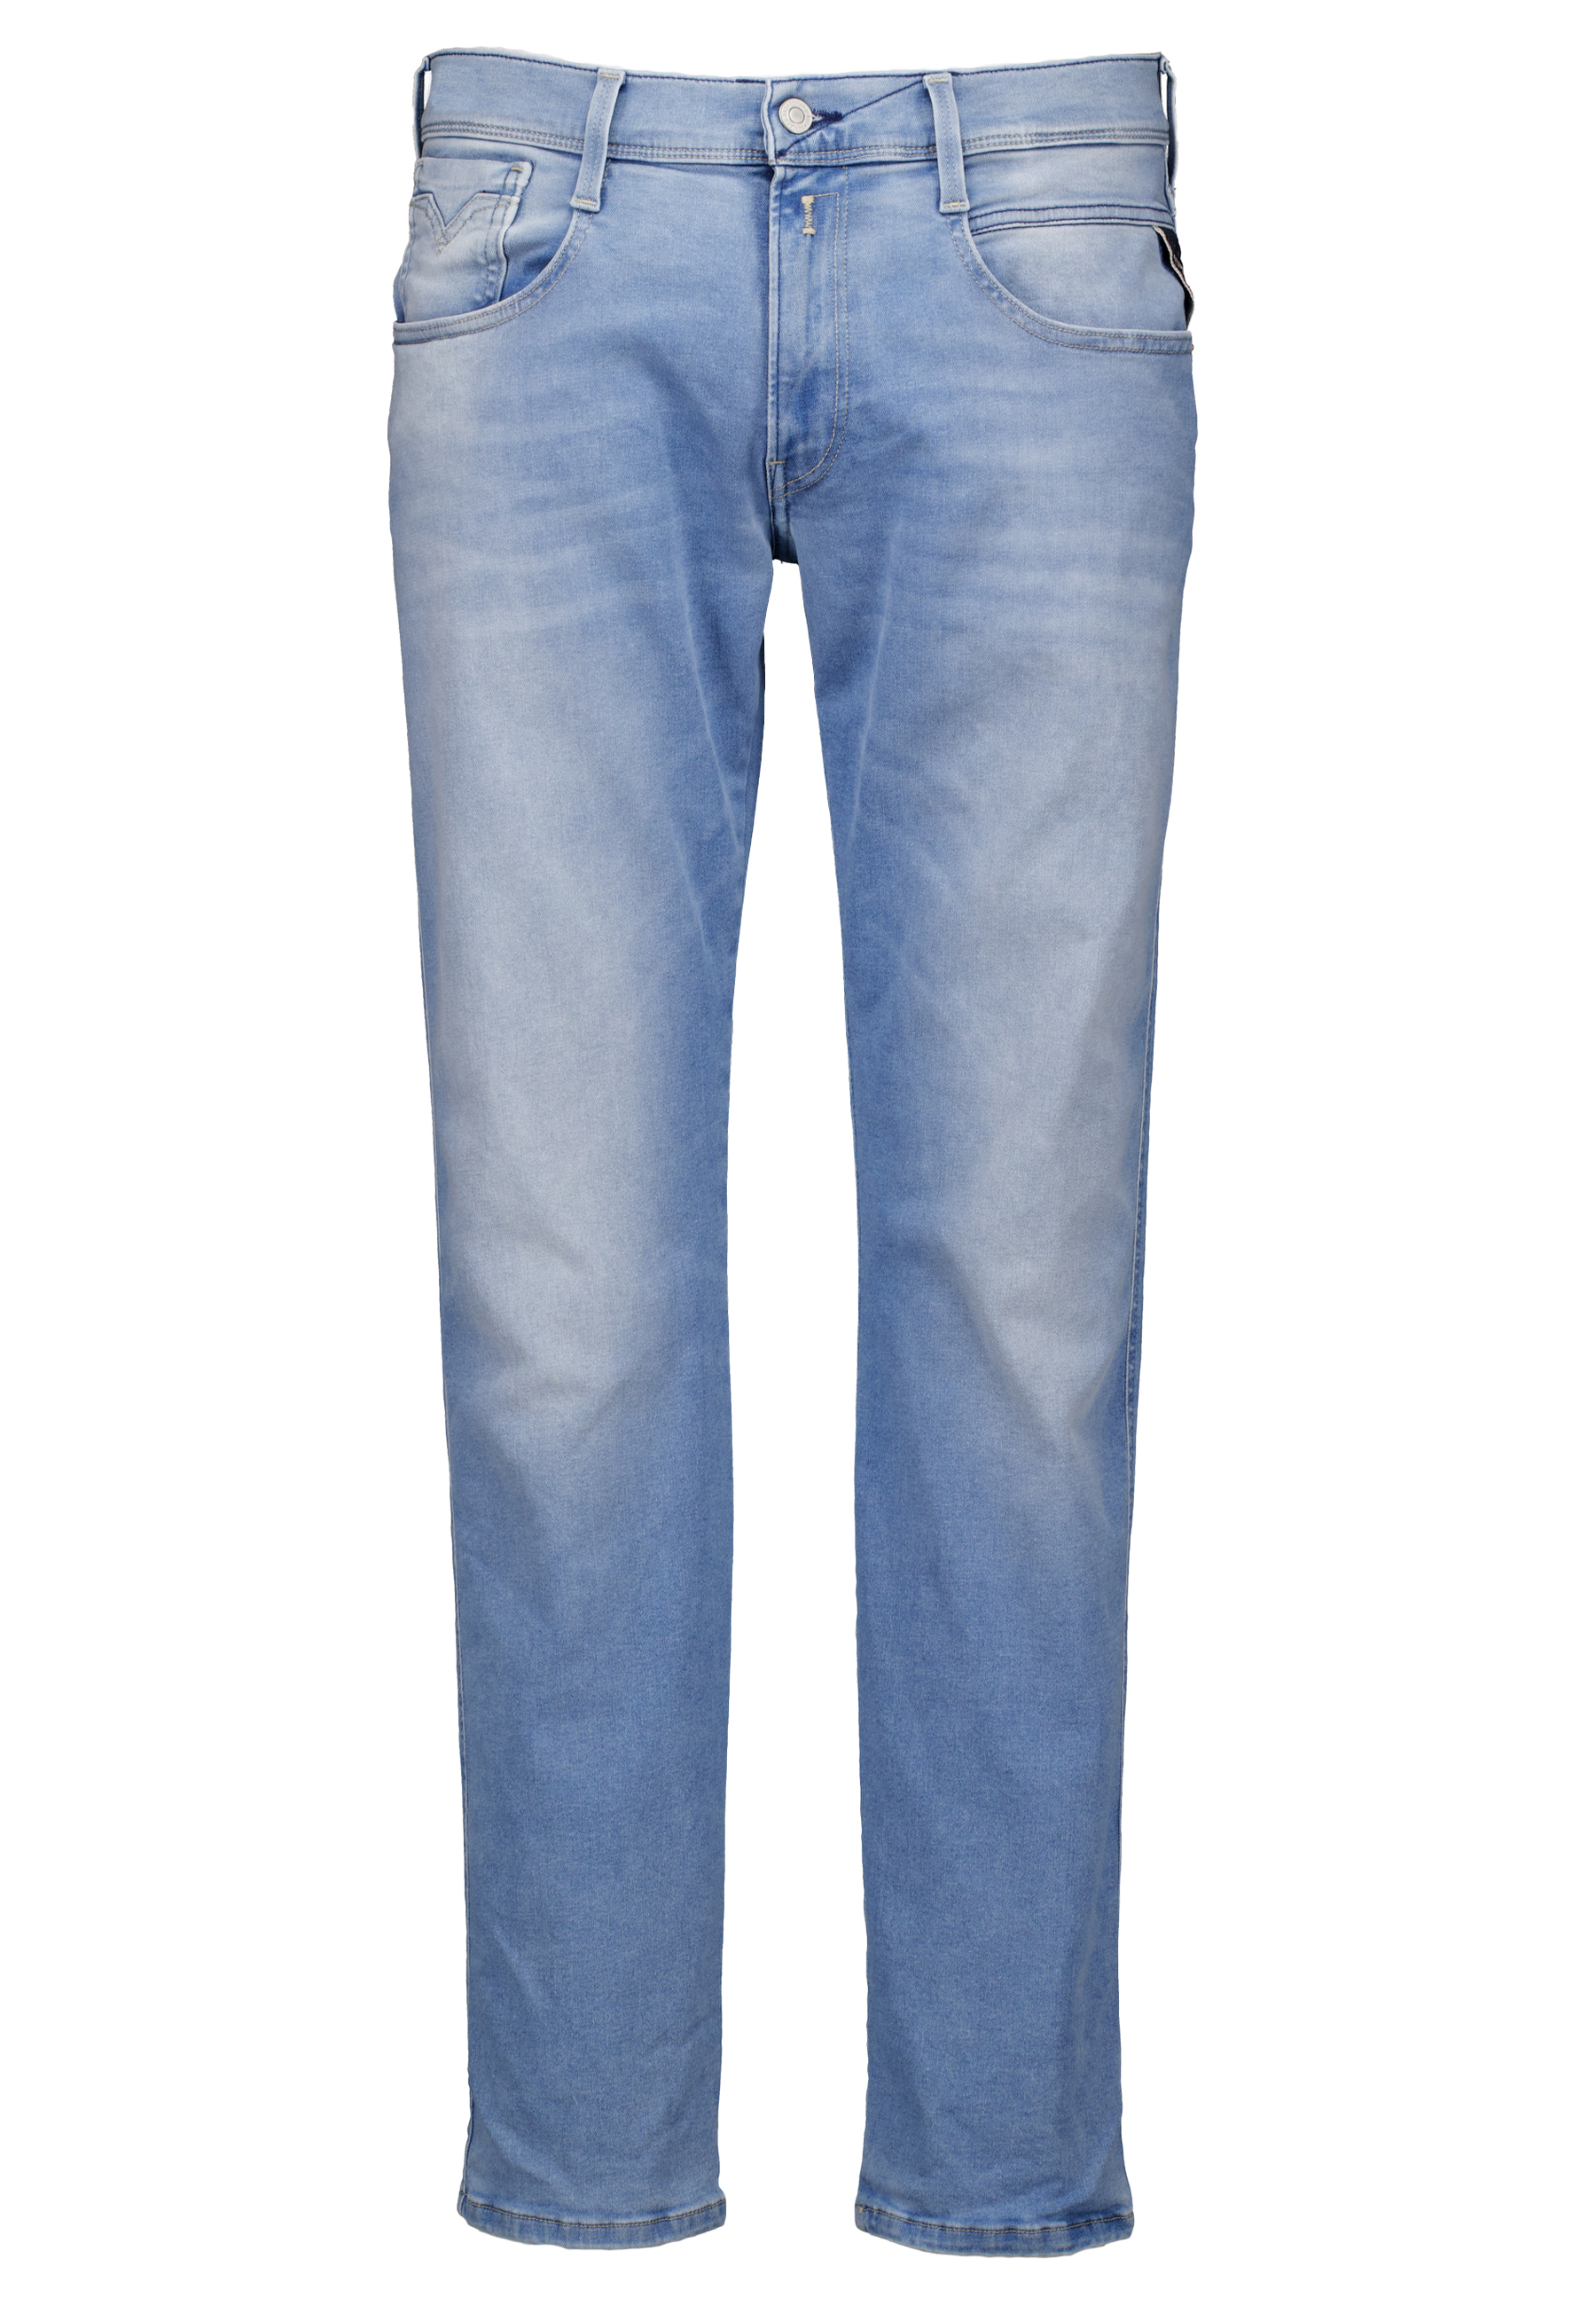 Replay Jeans Lichtblauw Katoen maat 34/32 slim fit lichtblauw